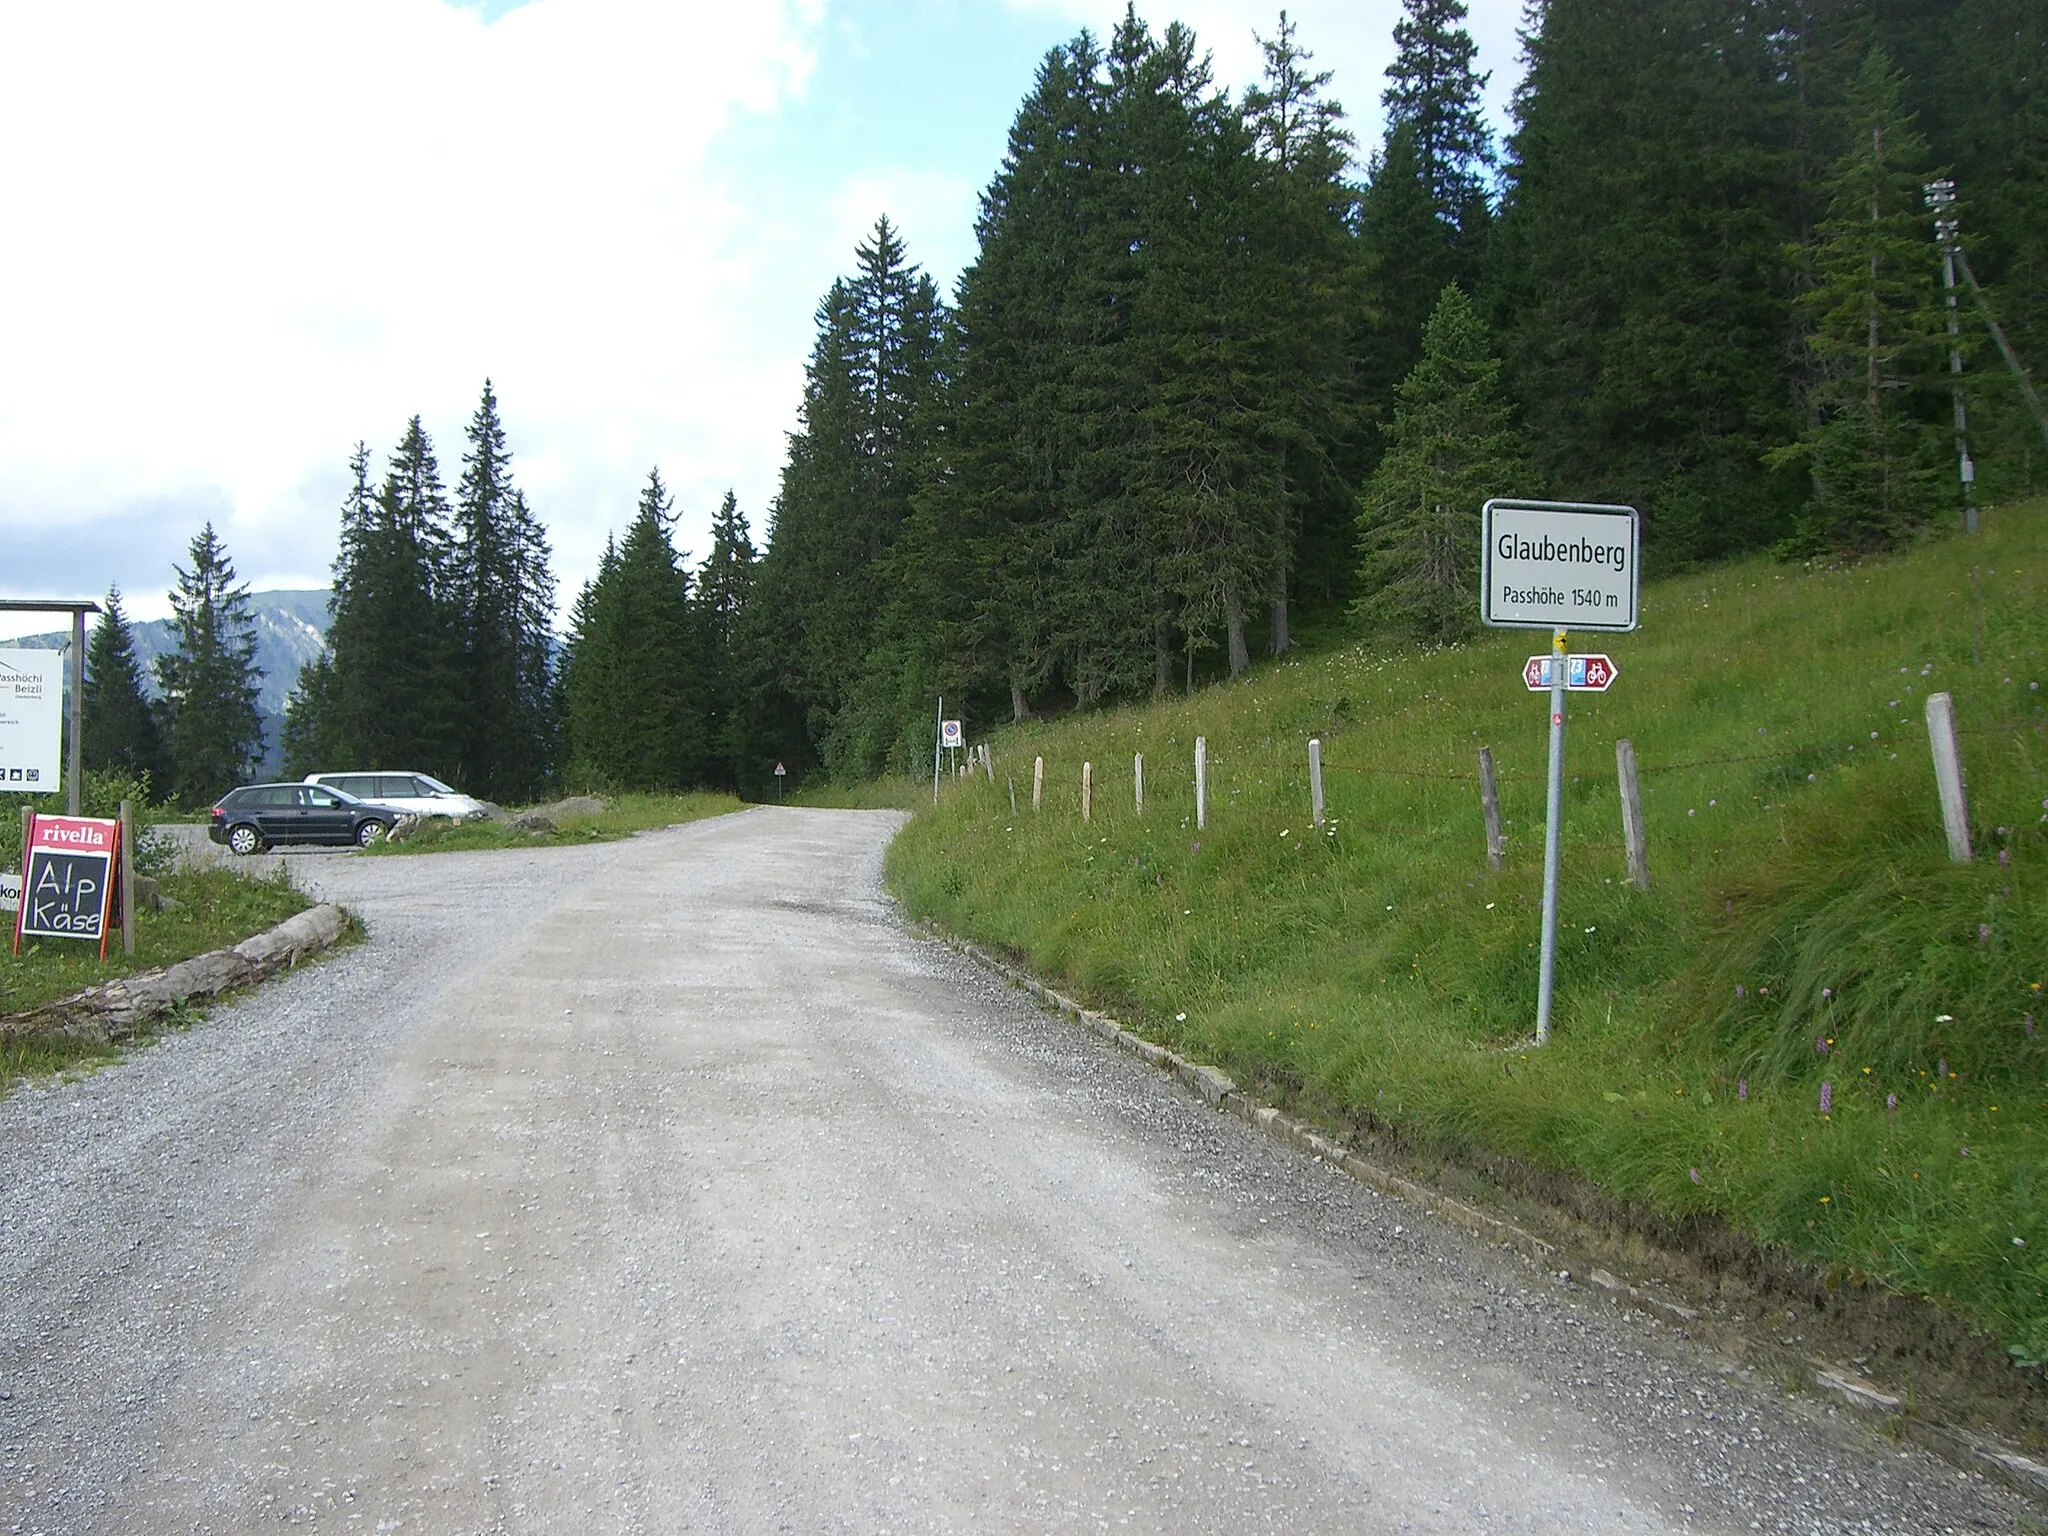 Photo showing: Glaubenberg pass summit with sign